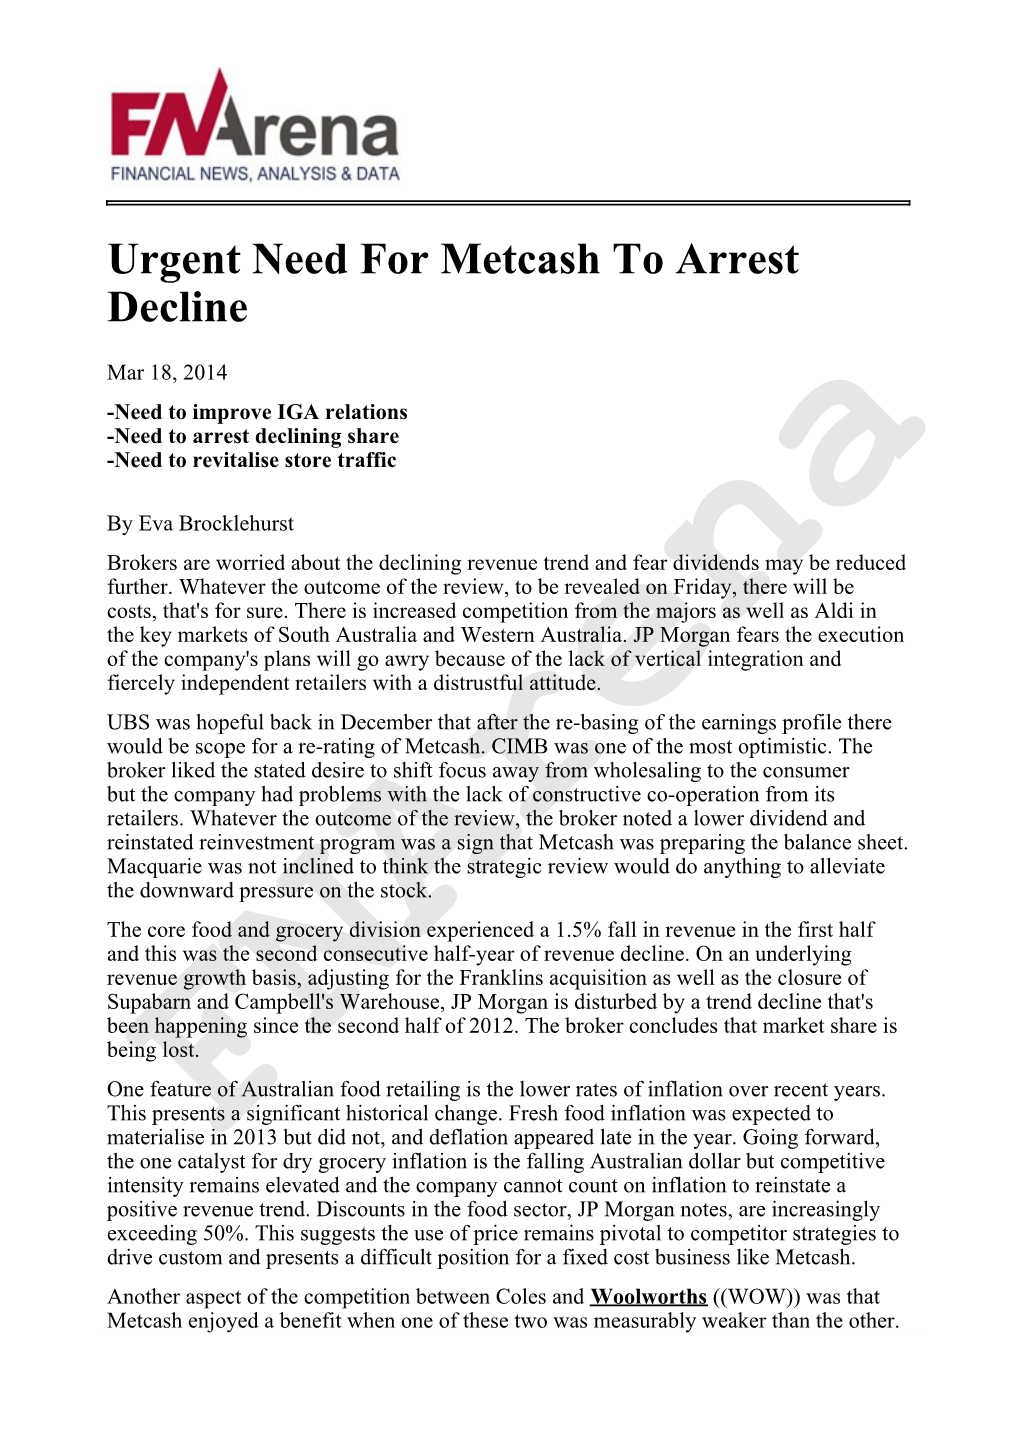 Urgent Need for Metcash to Arrest Decline